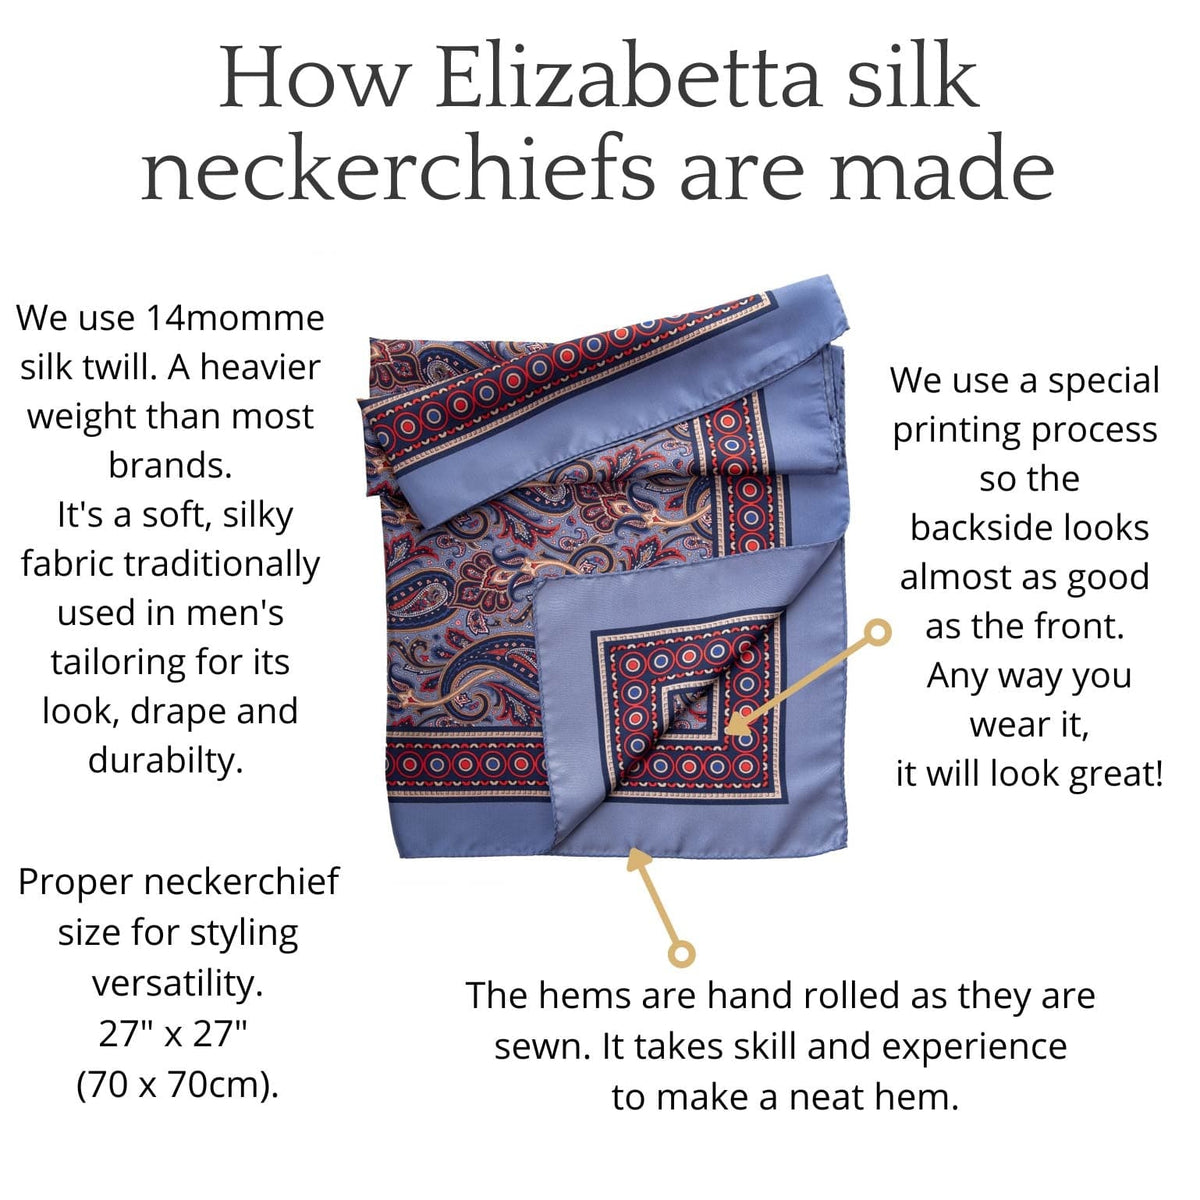 How our neckerchiefs are made